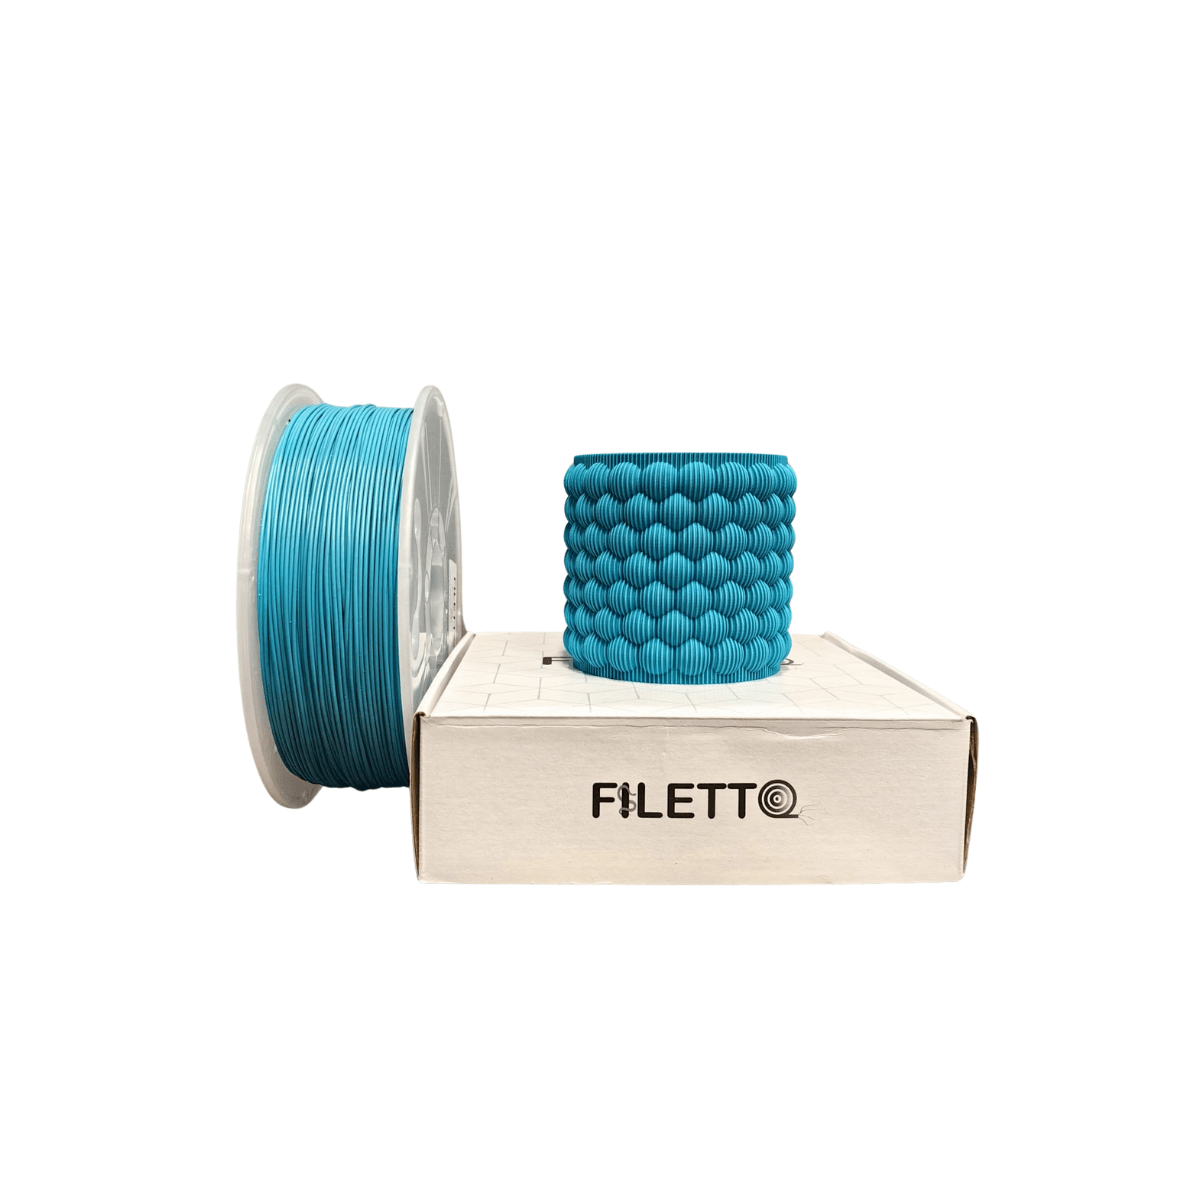 Filetto Pla+ Filament 1.75mm 1KG - Light Blue